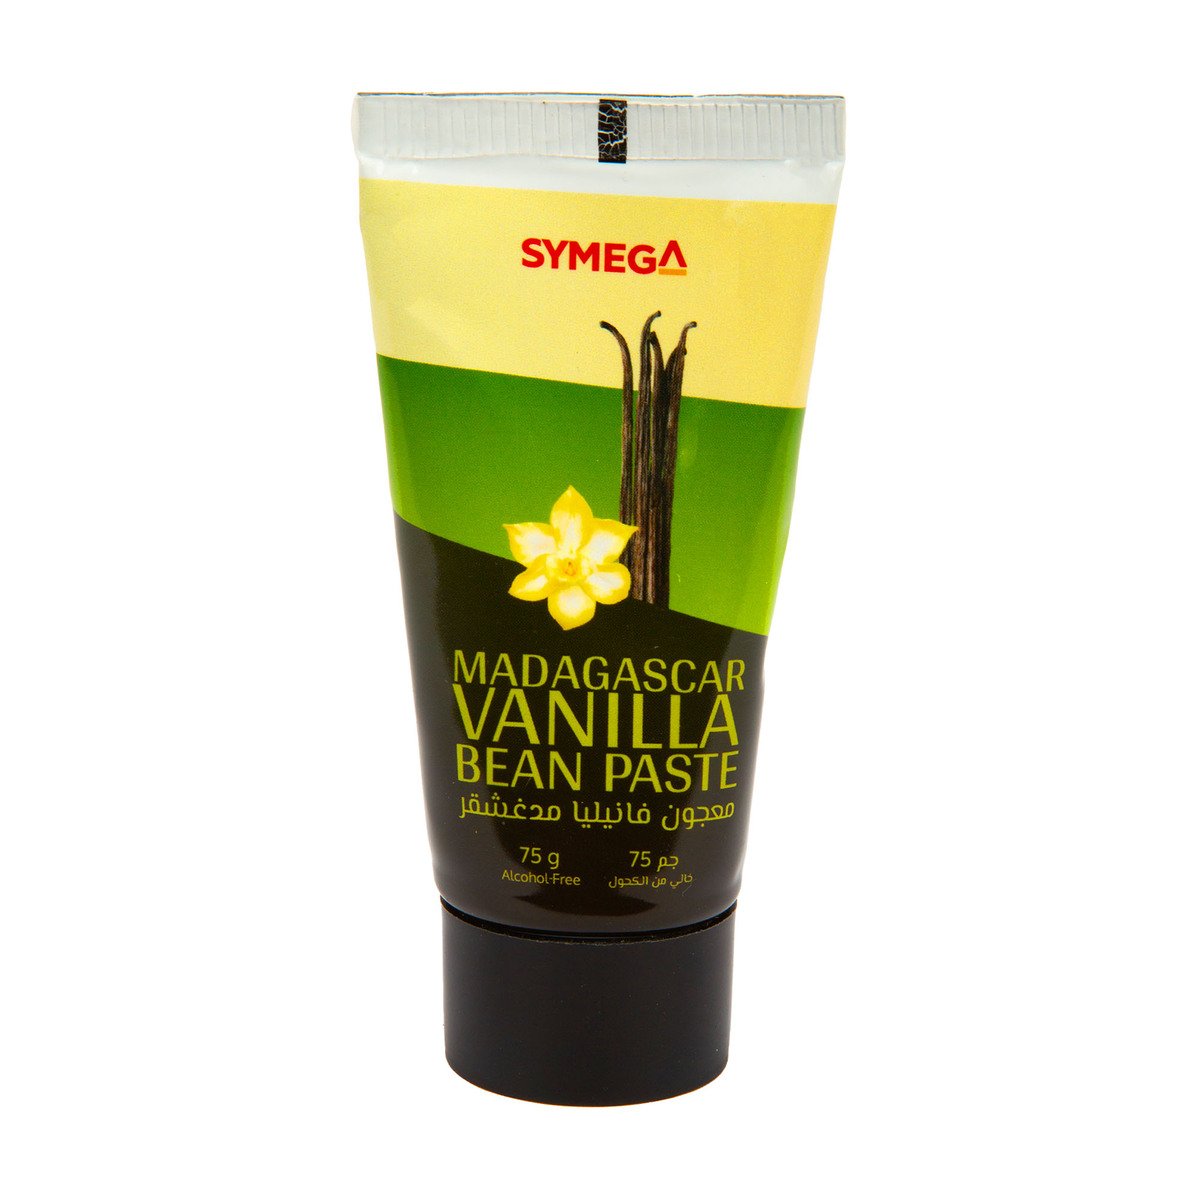 Symega Madagascar Vanilla Bean Paste 75 g